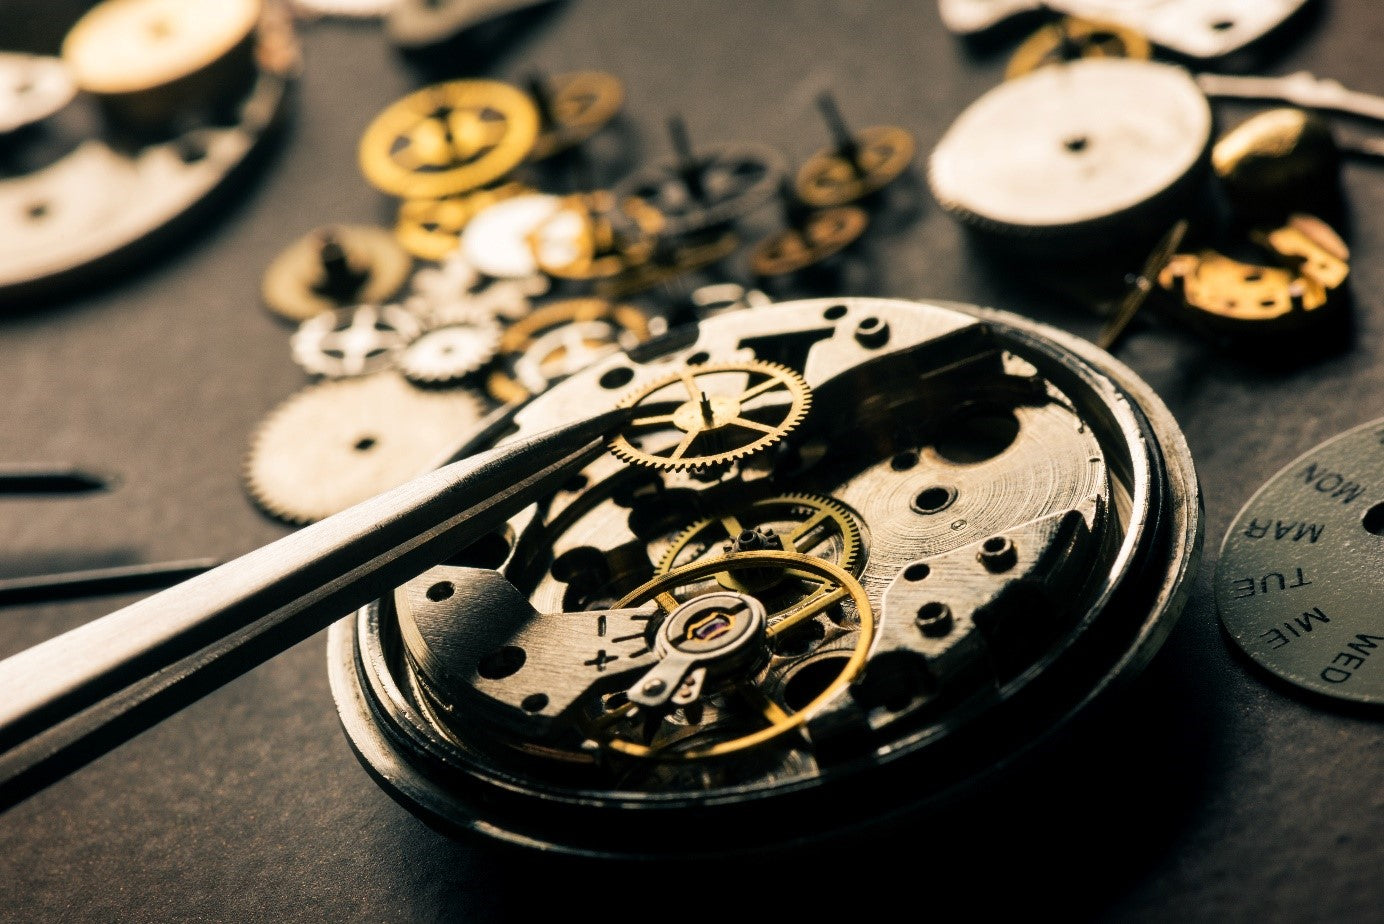 Mechanical Watches - timeless classics